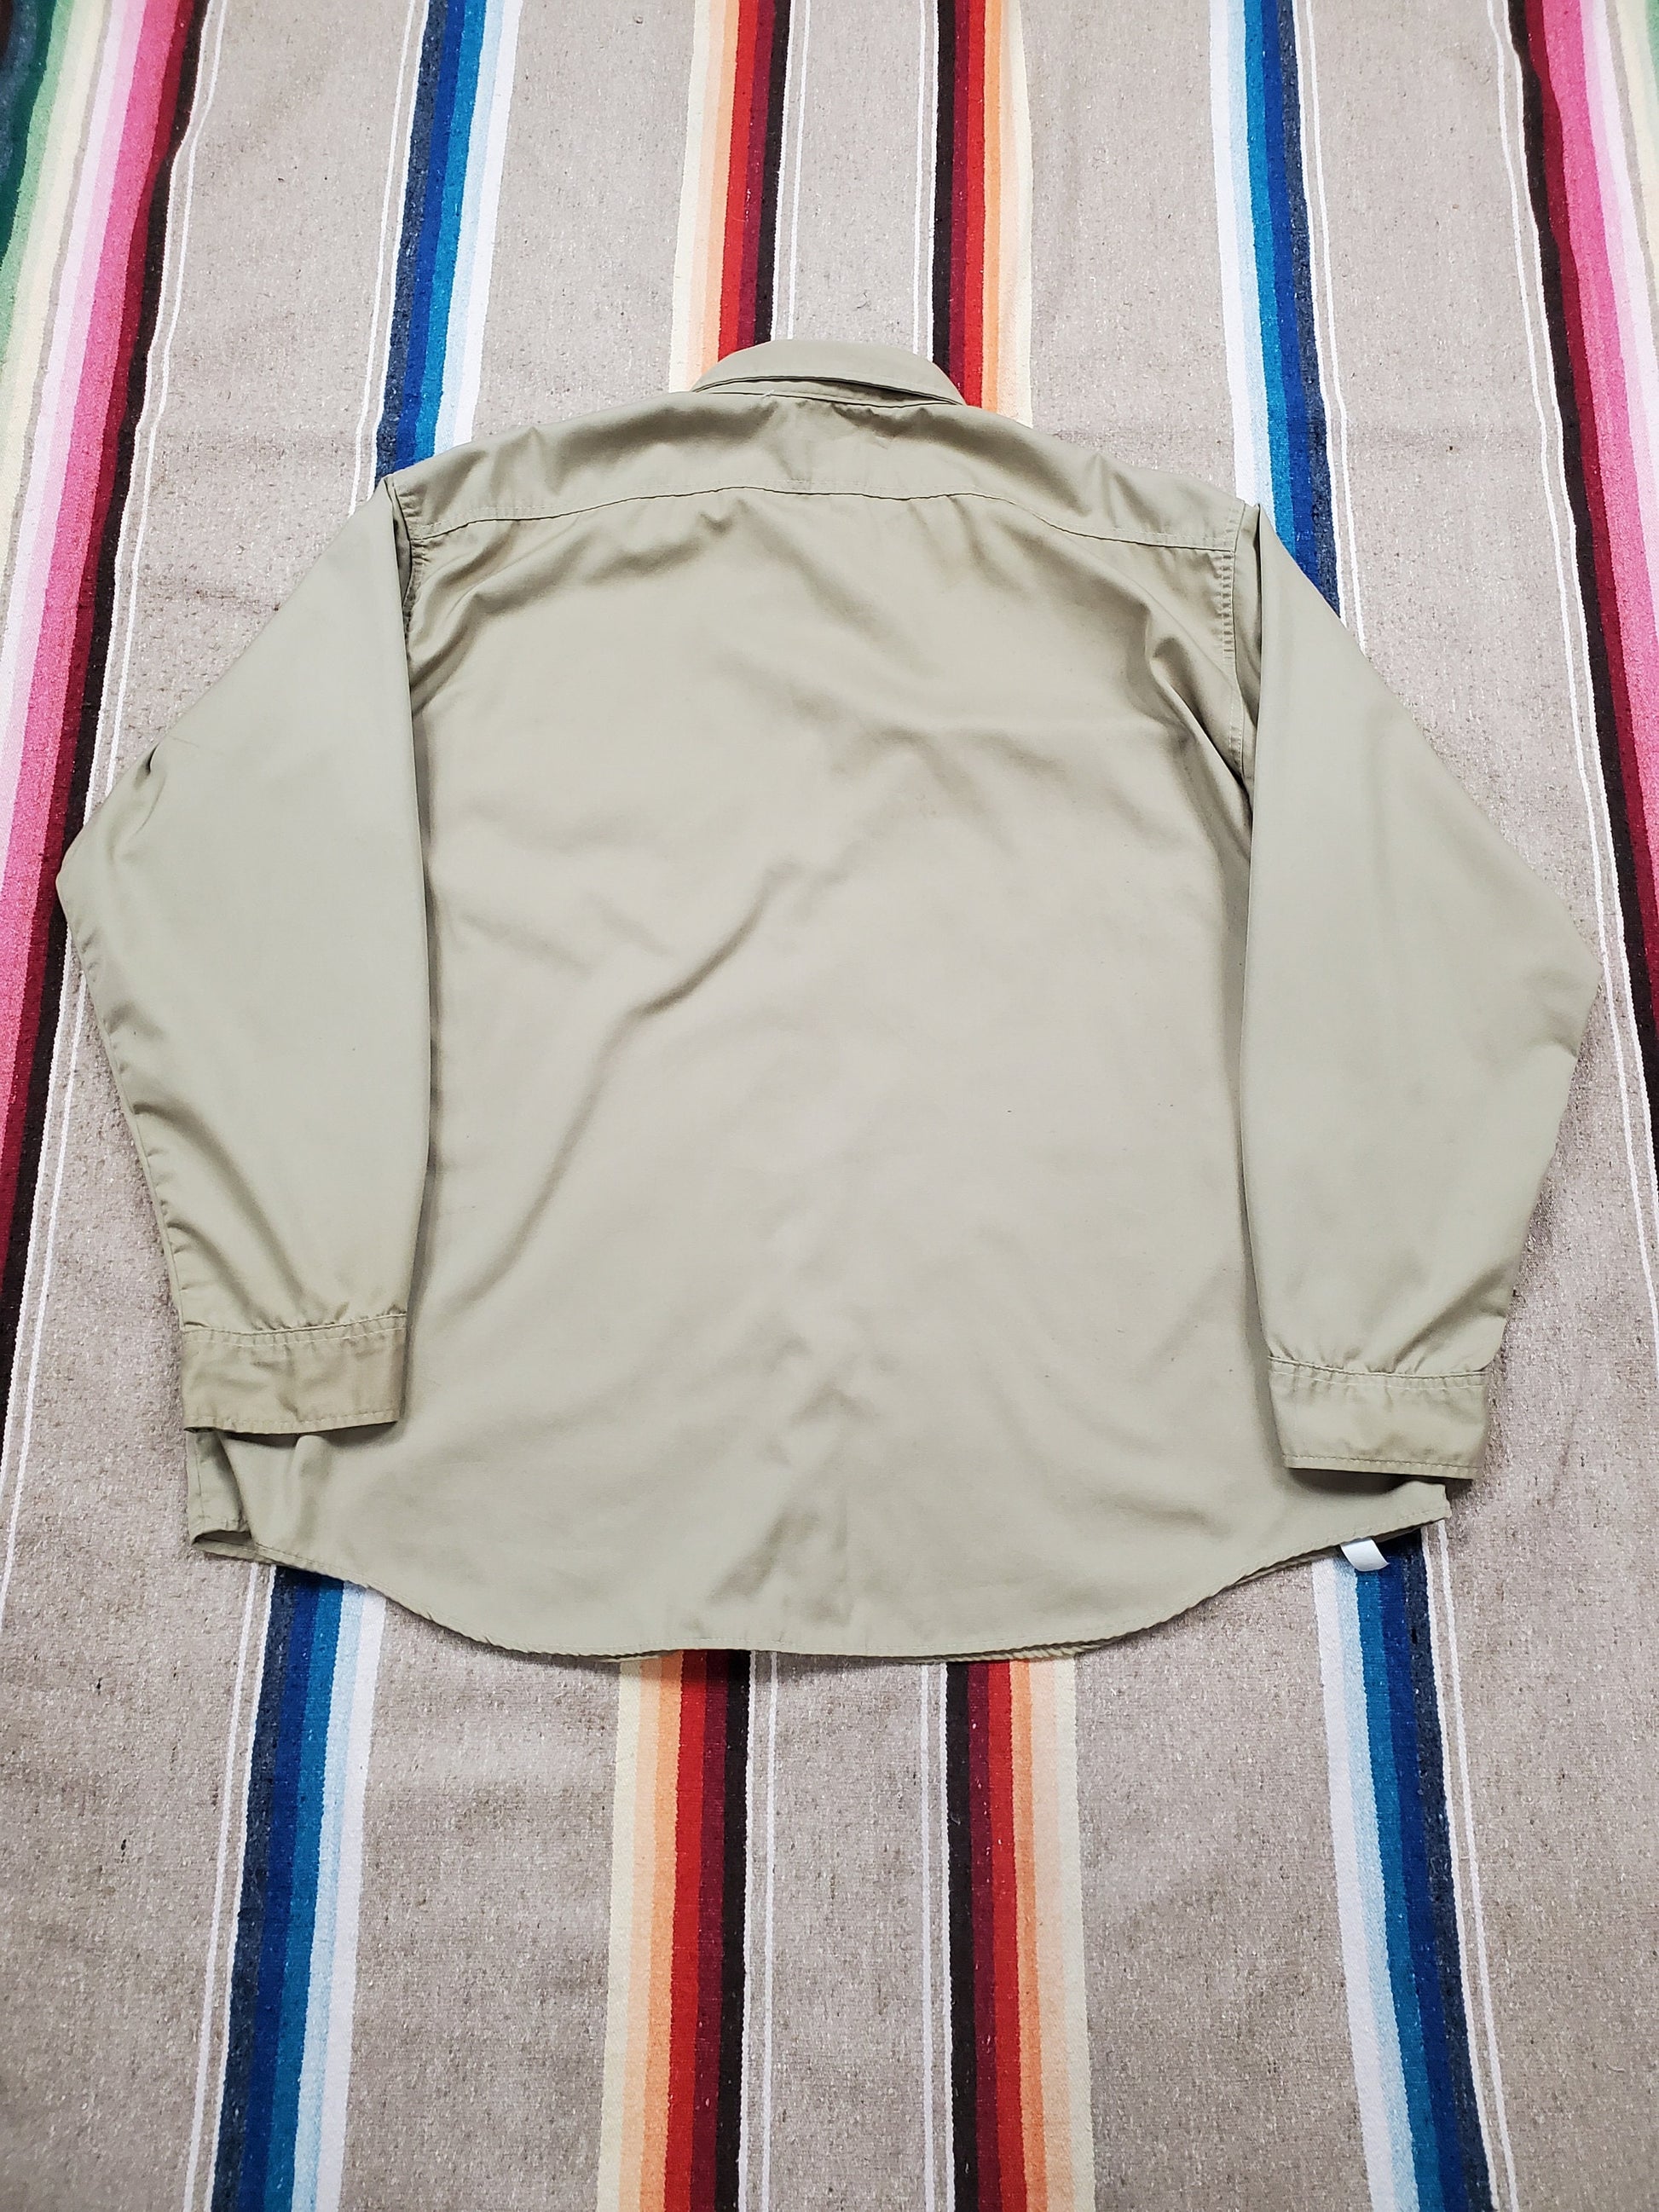 1980s OshKosh B'Gosh Best-Prest Snap Front Khaki Work Shirt Made in USA Size XXL